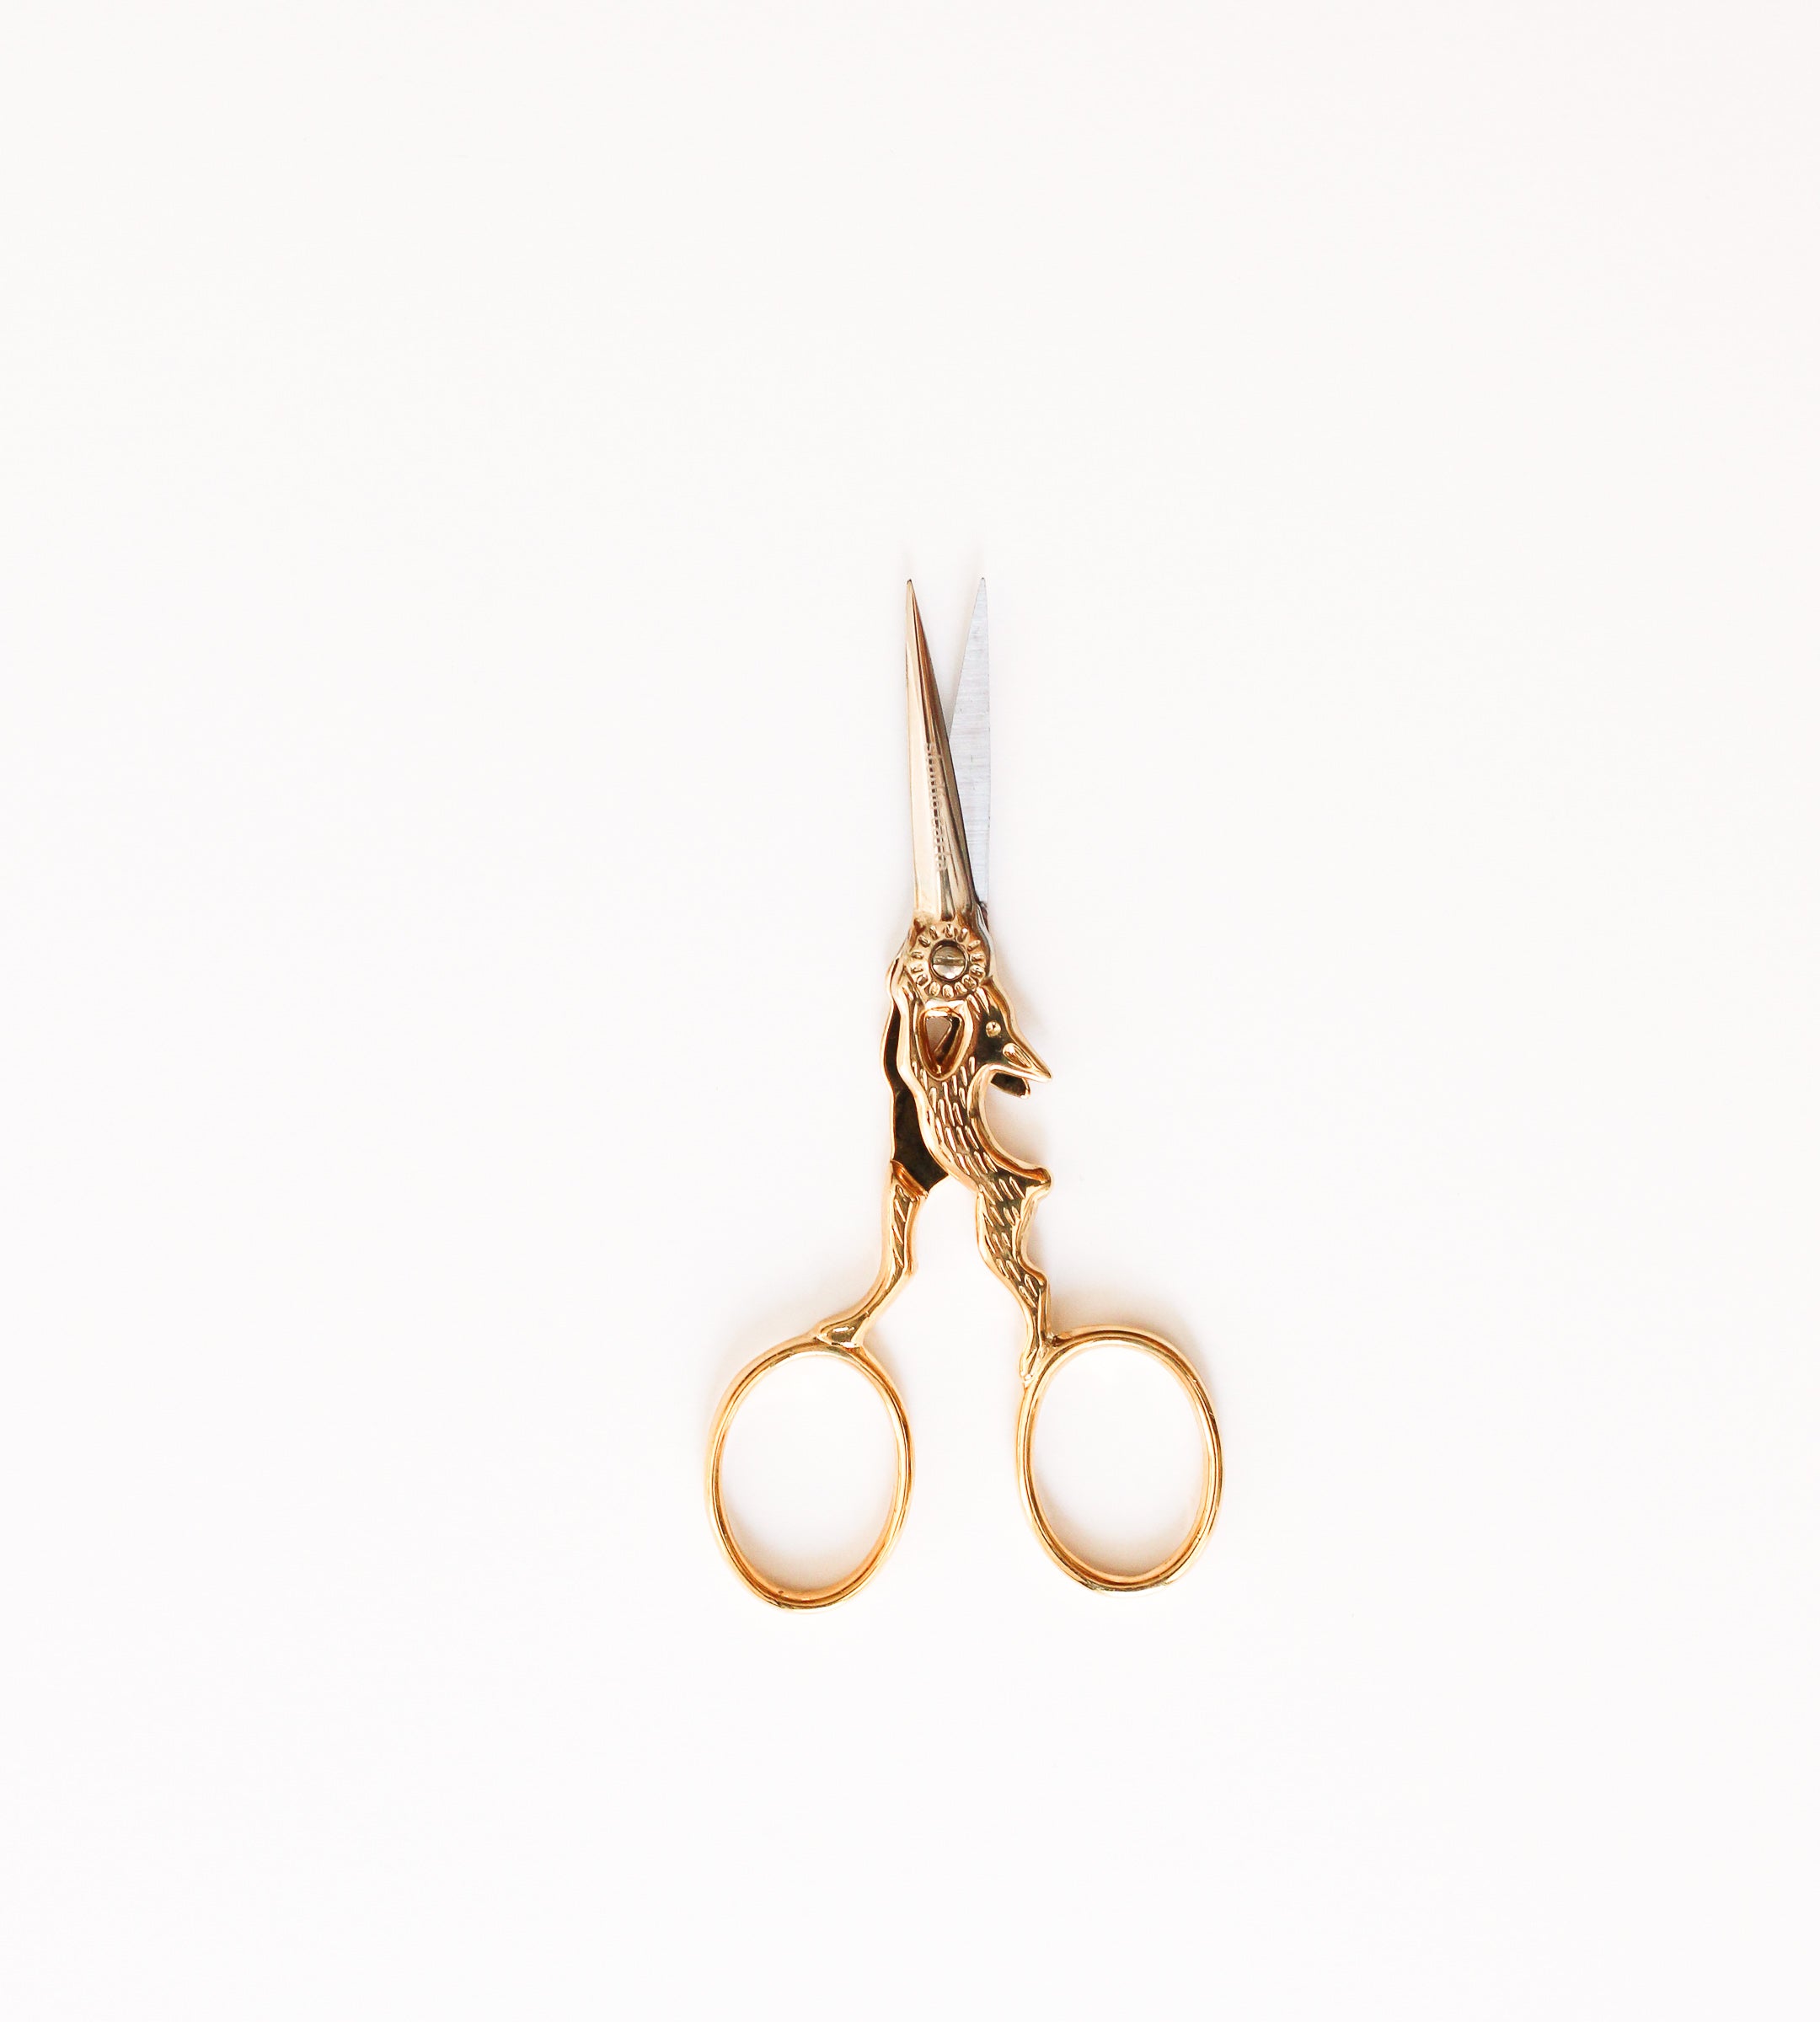 Barber Hairdresser Scissors Comb As A Heart Gift Art Print by NAO